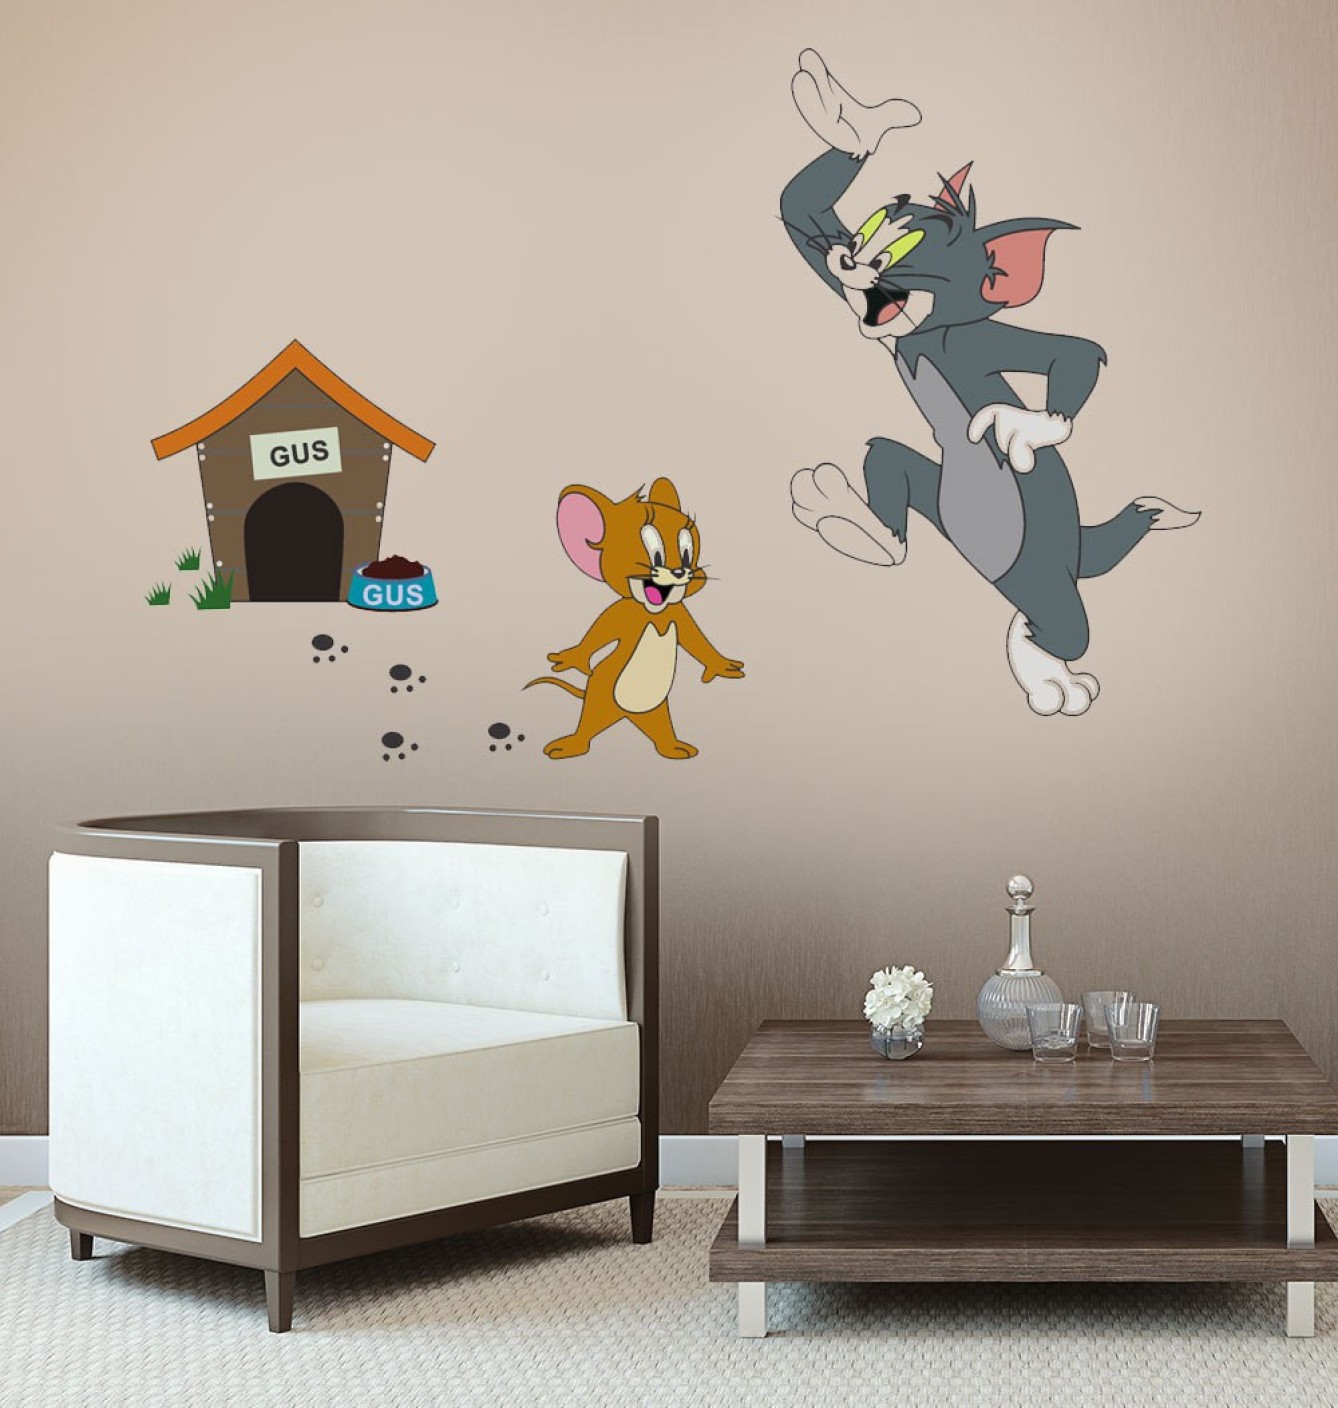 wallpaper for bedroom walls india,wall,wall sticker,room,interior design,furniture